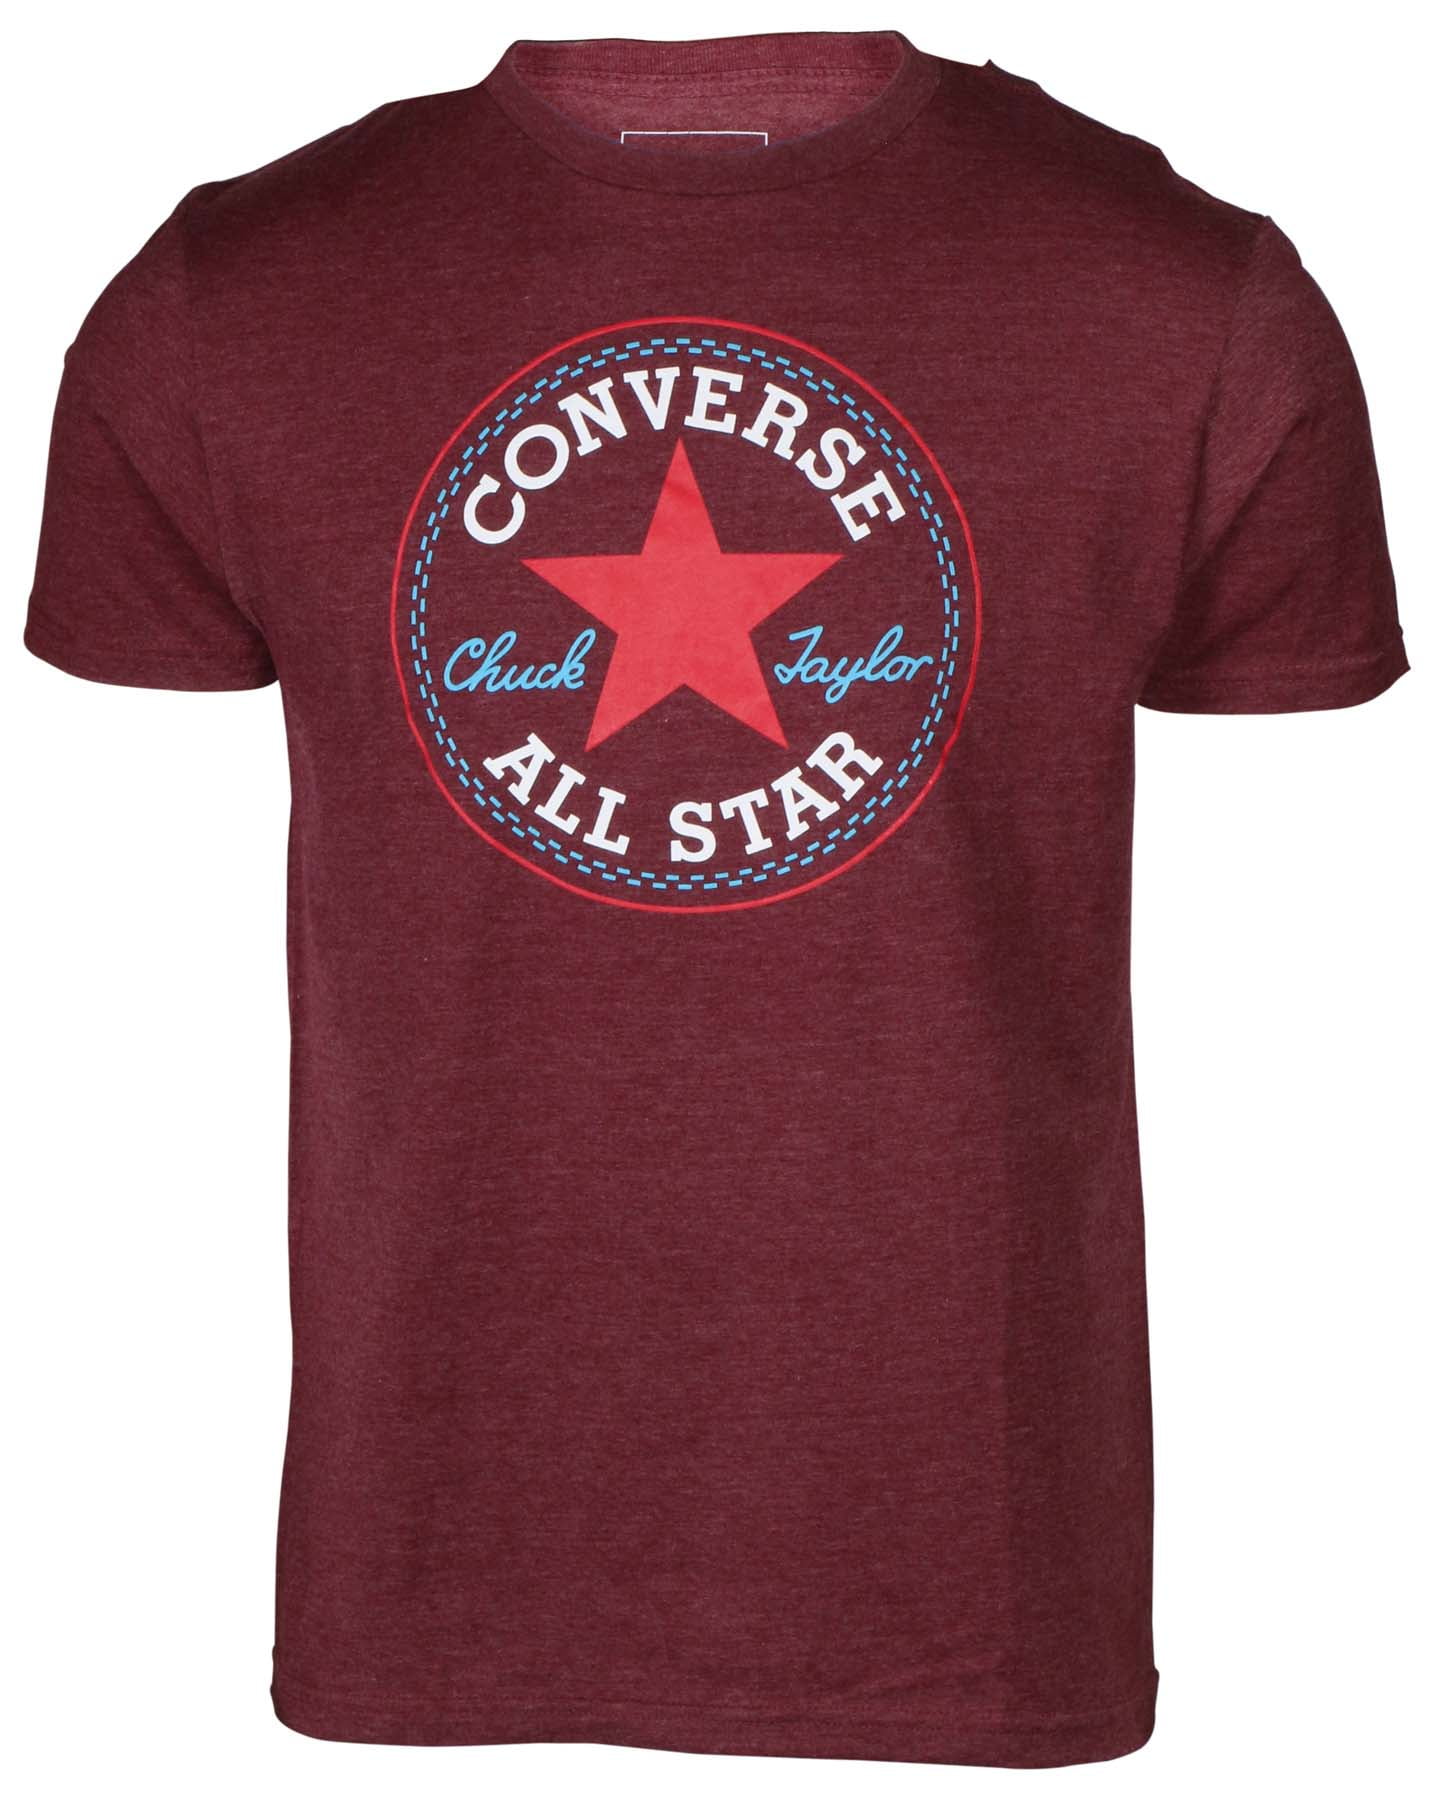 burgundy converse shirt